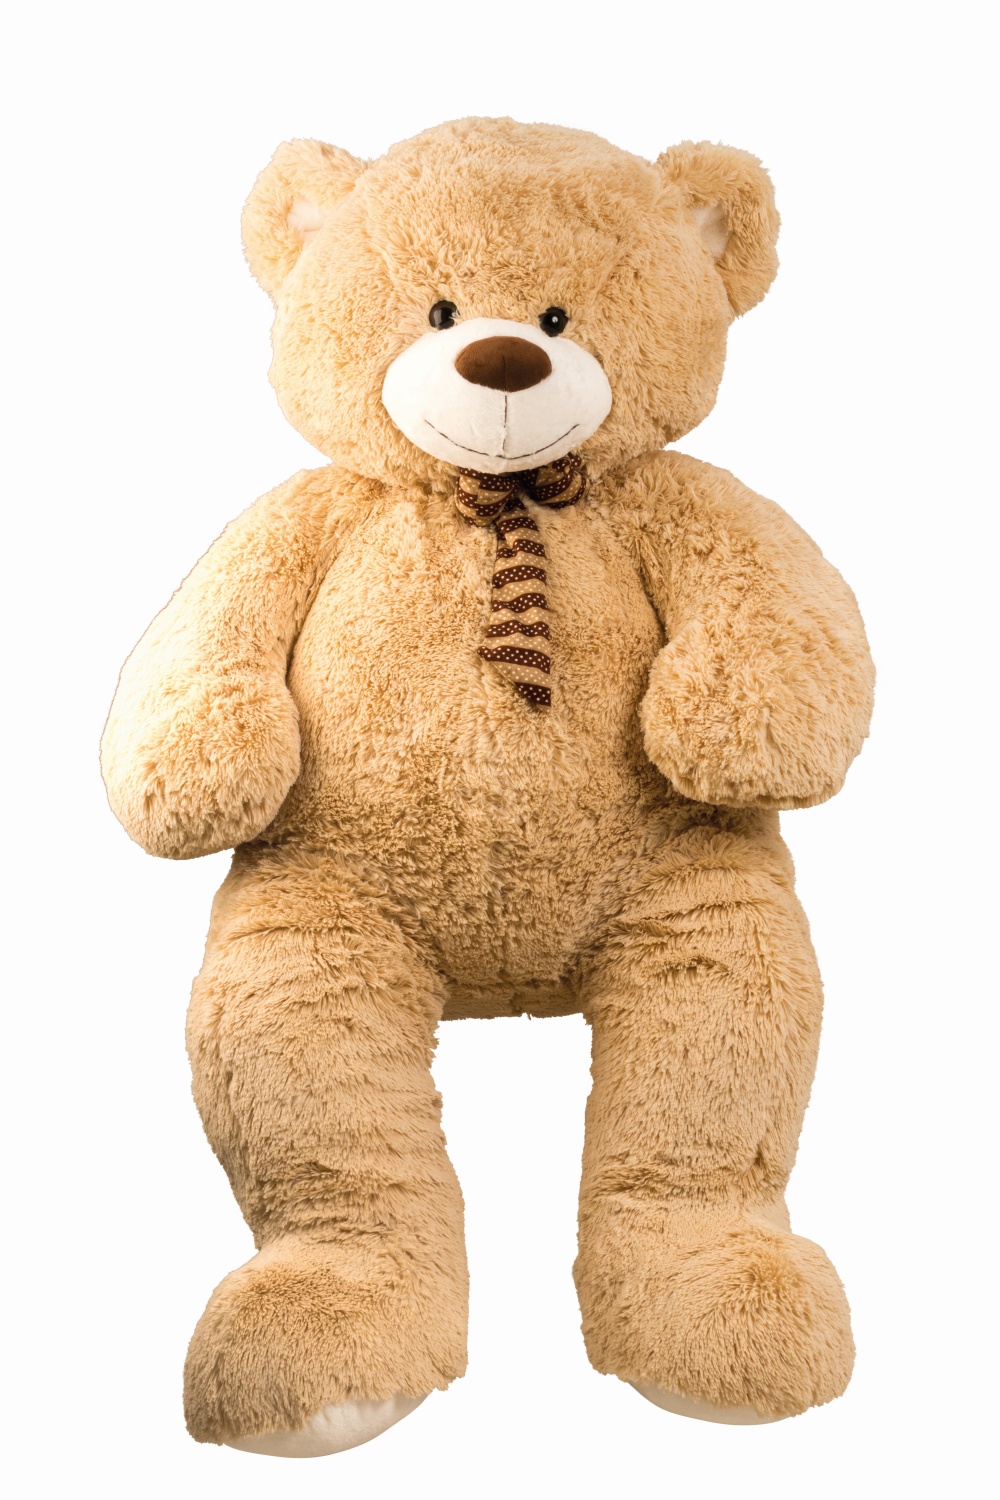 Riesen Teddybär Plüsch Soft Cotton Kuschelbär Teddy Plüschbär aus Plüsch 120cm 